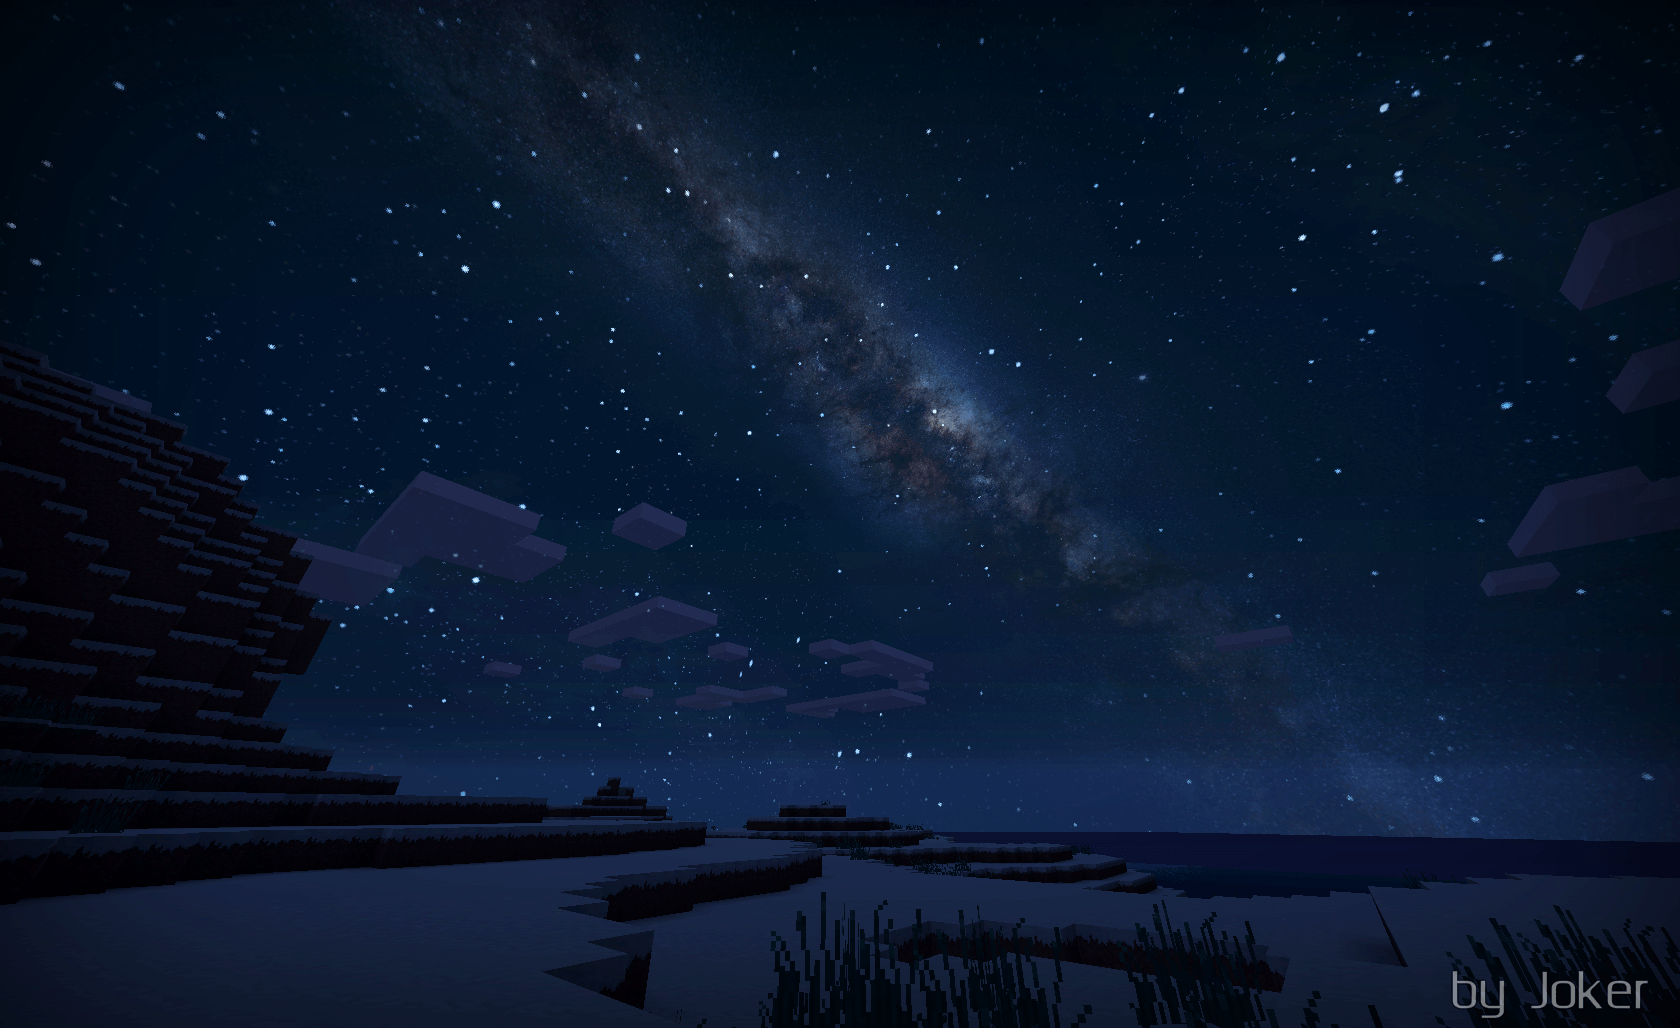 Beauty of Minecraft at night!